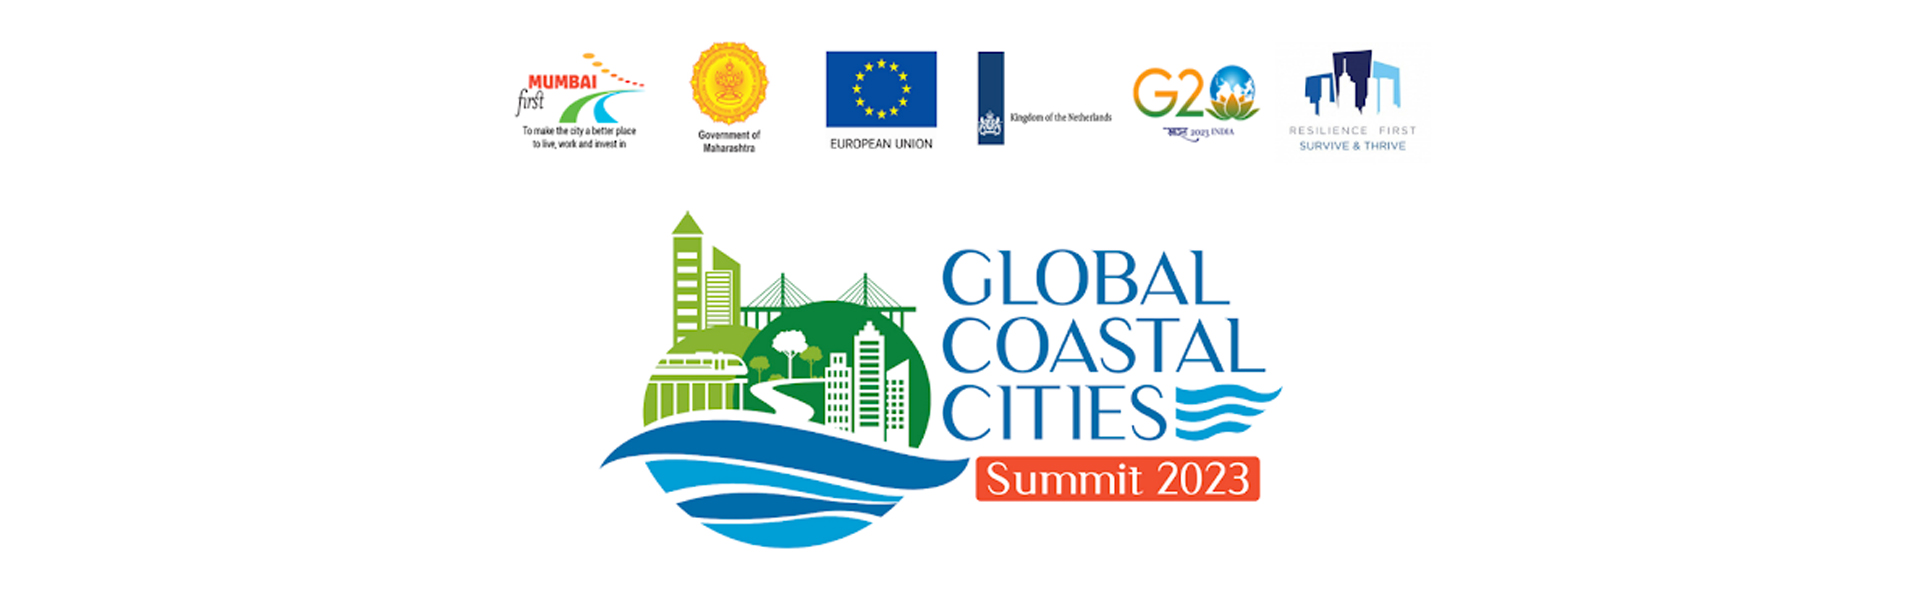 Global Coastal Cities Summit 2023